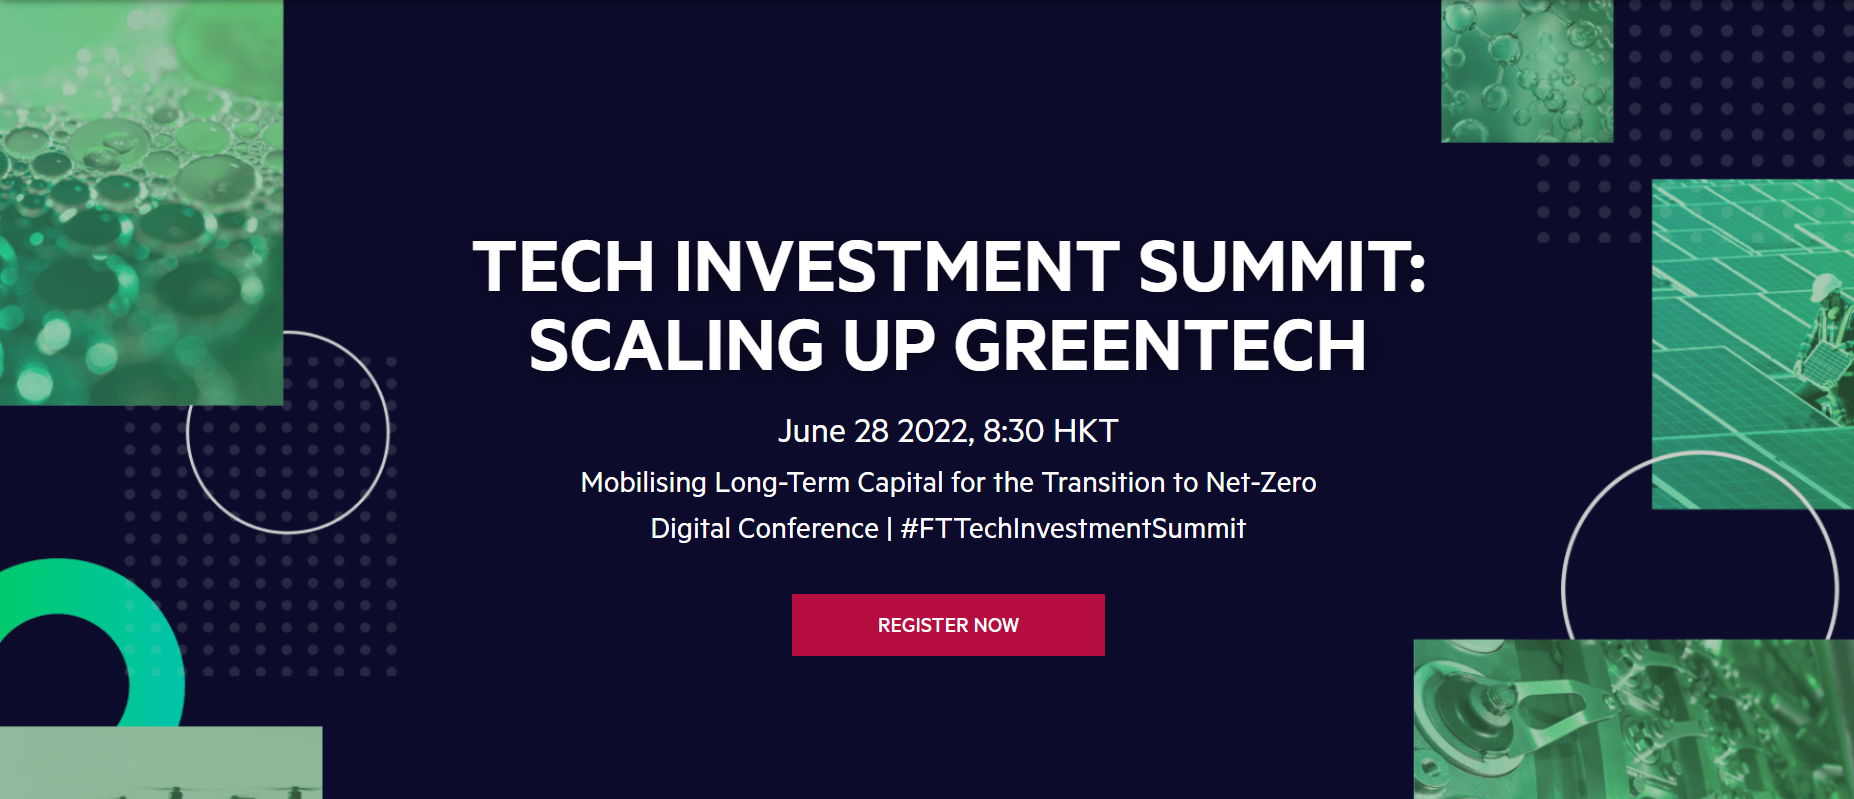 Tech Investment Summit - Scaling up Greentech